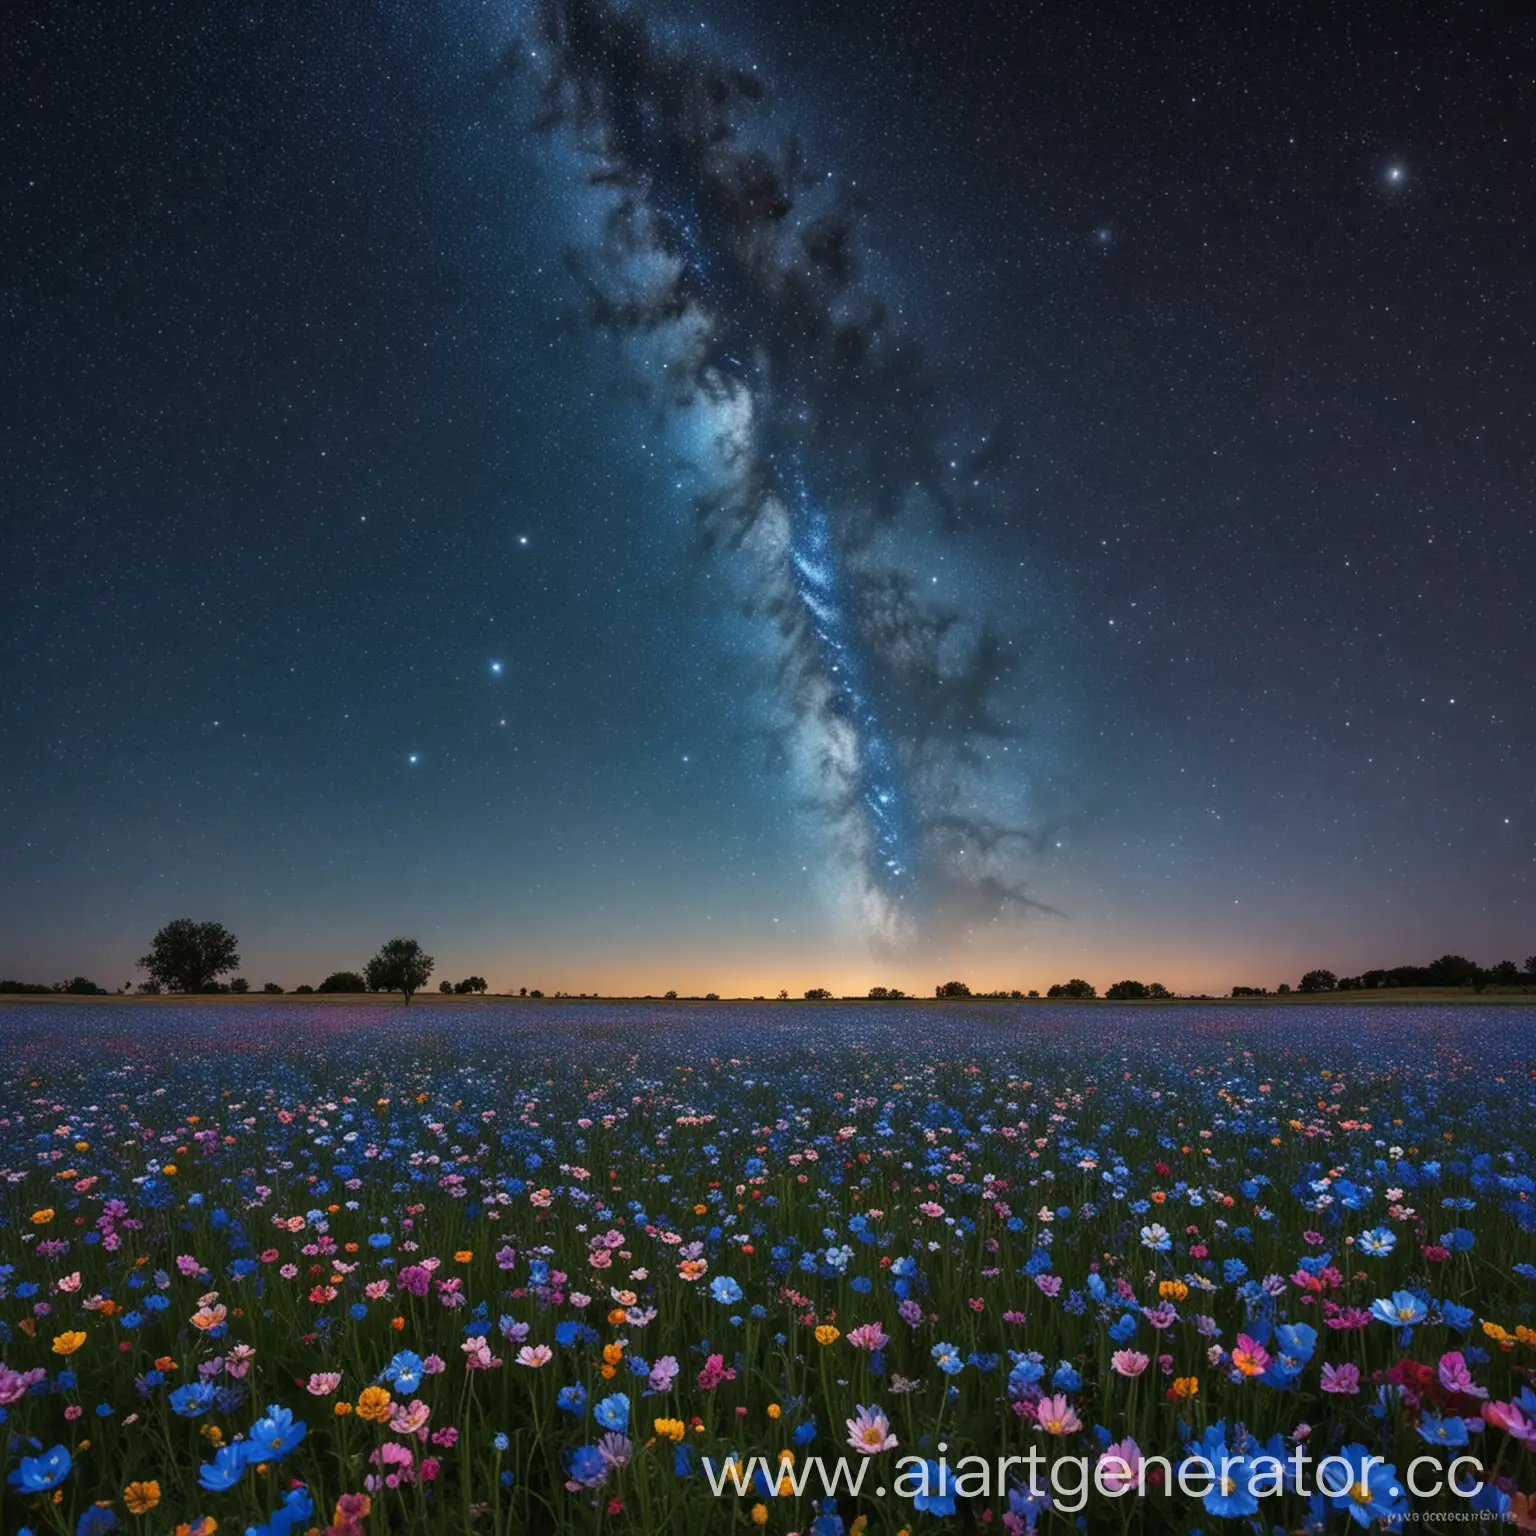 Mystical-Flower-Field-under-a-Billion-Stars-Enchanting-Nature-and-Celestial-Harmony